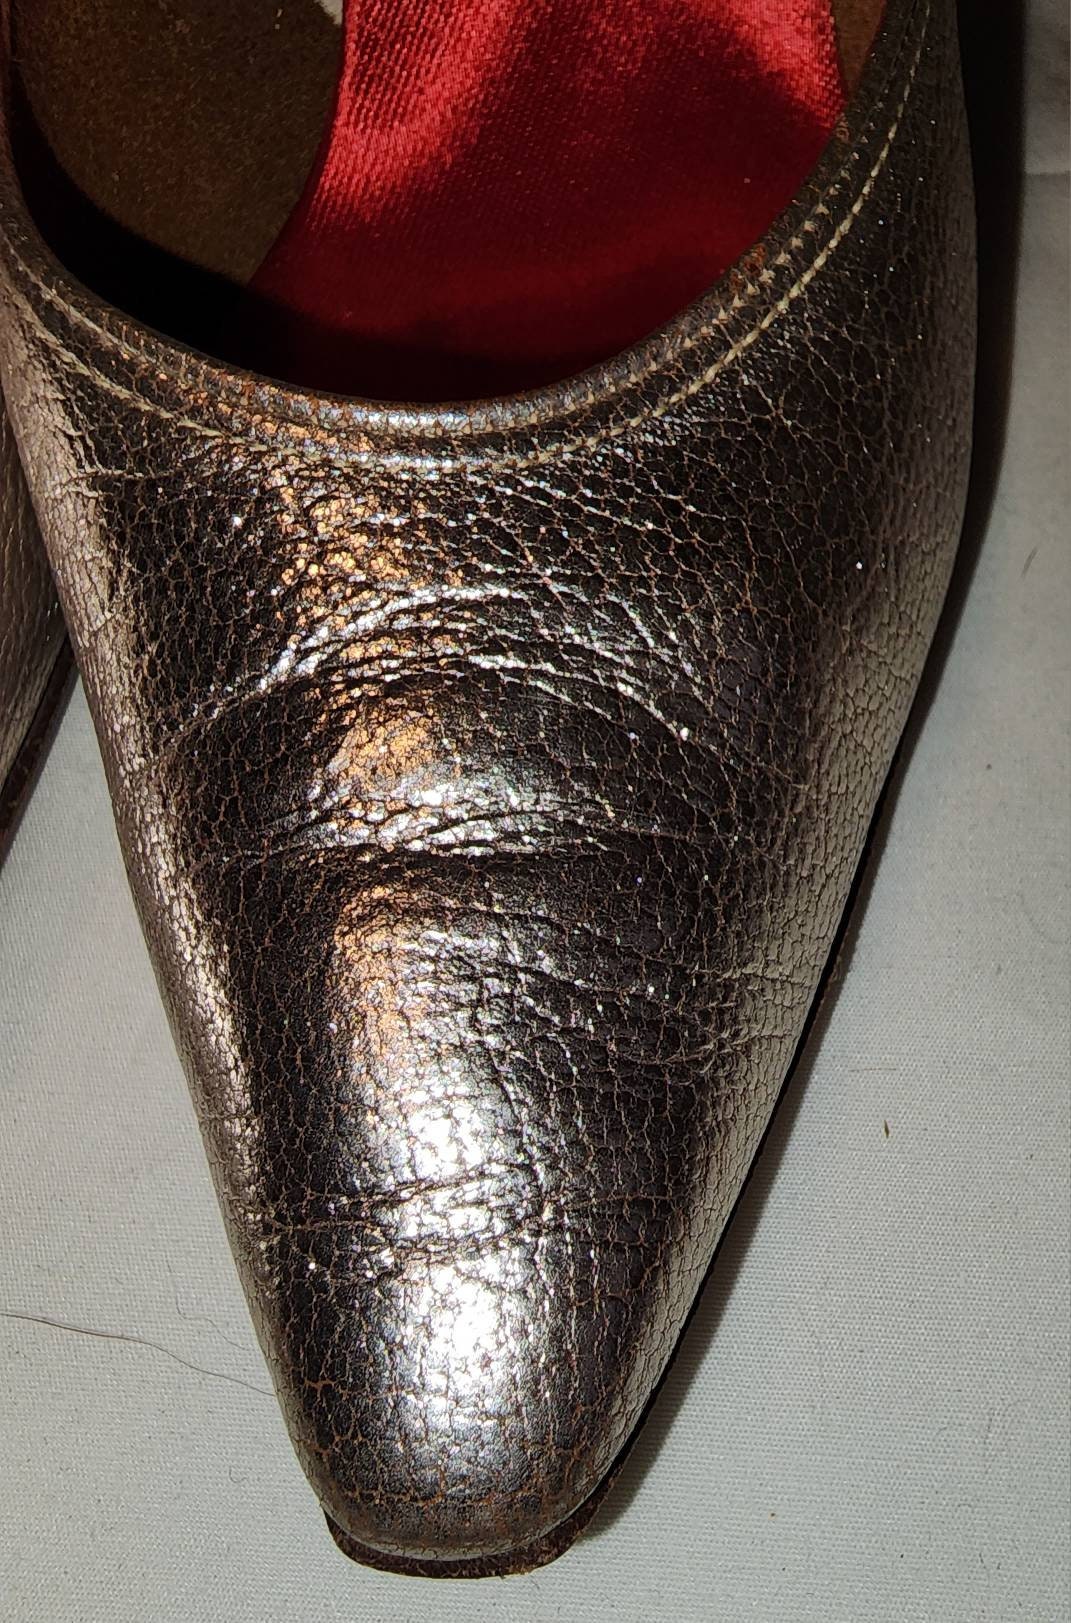 Vintage Silver Shoes 1950s 60s Silver Metallic Leather or Vinyl Stiletto High Heel Pumps Mid Century Rockabilly 4.5 B